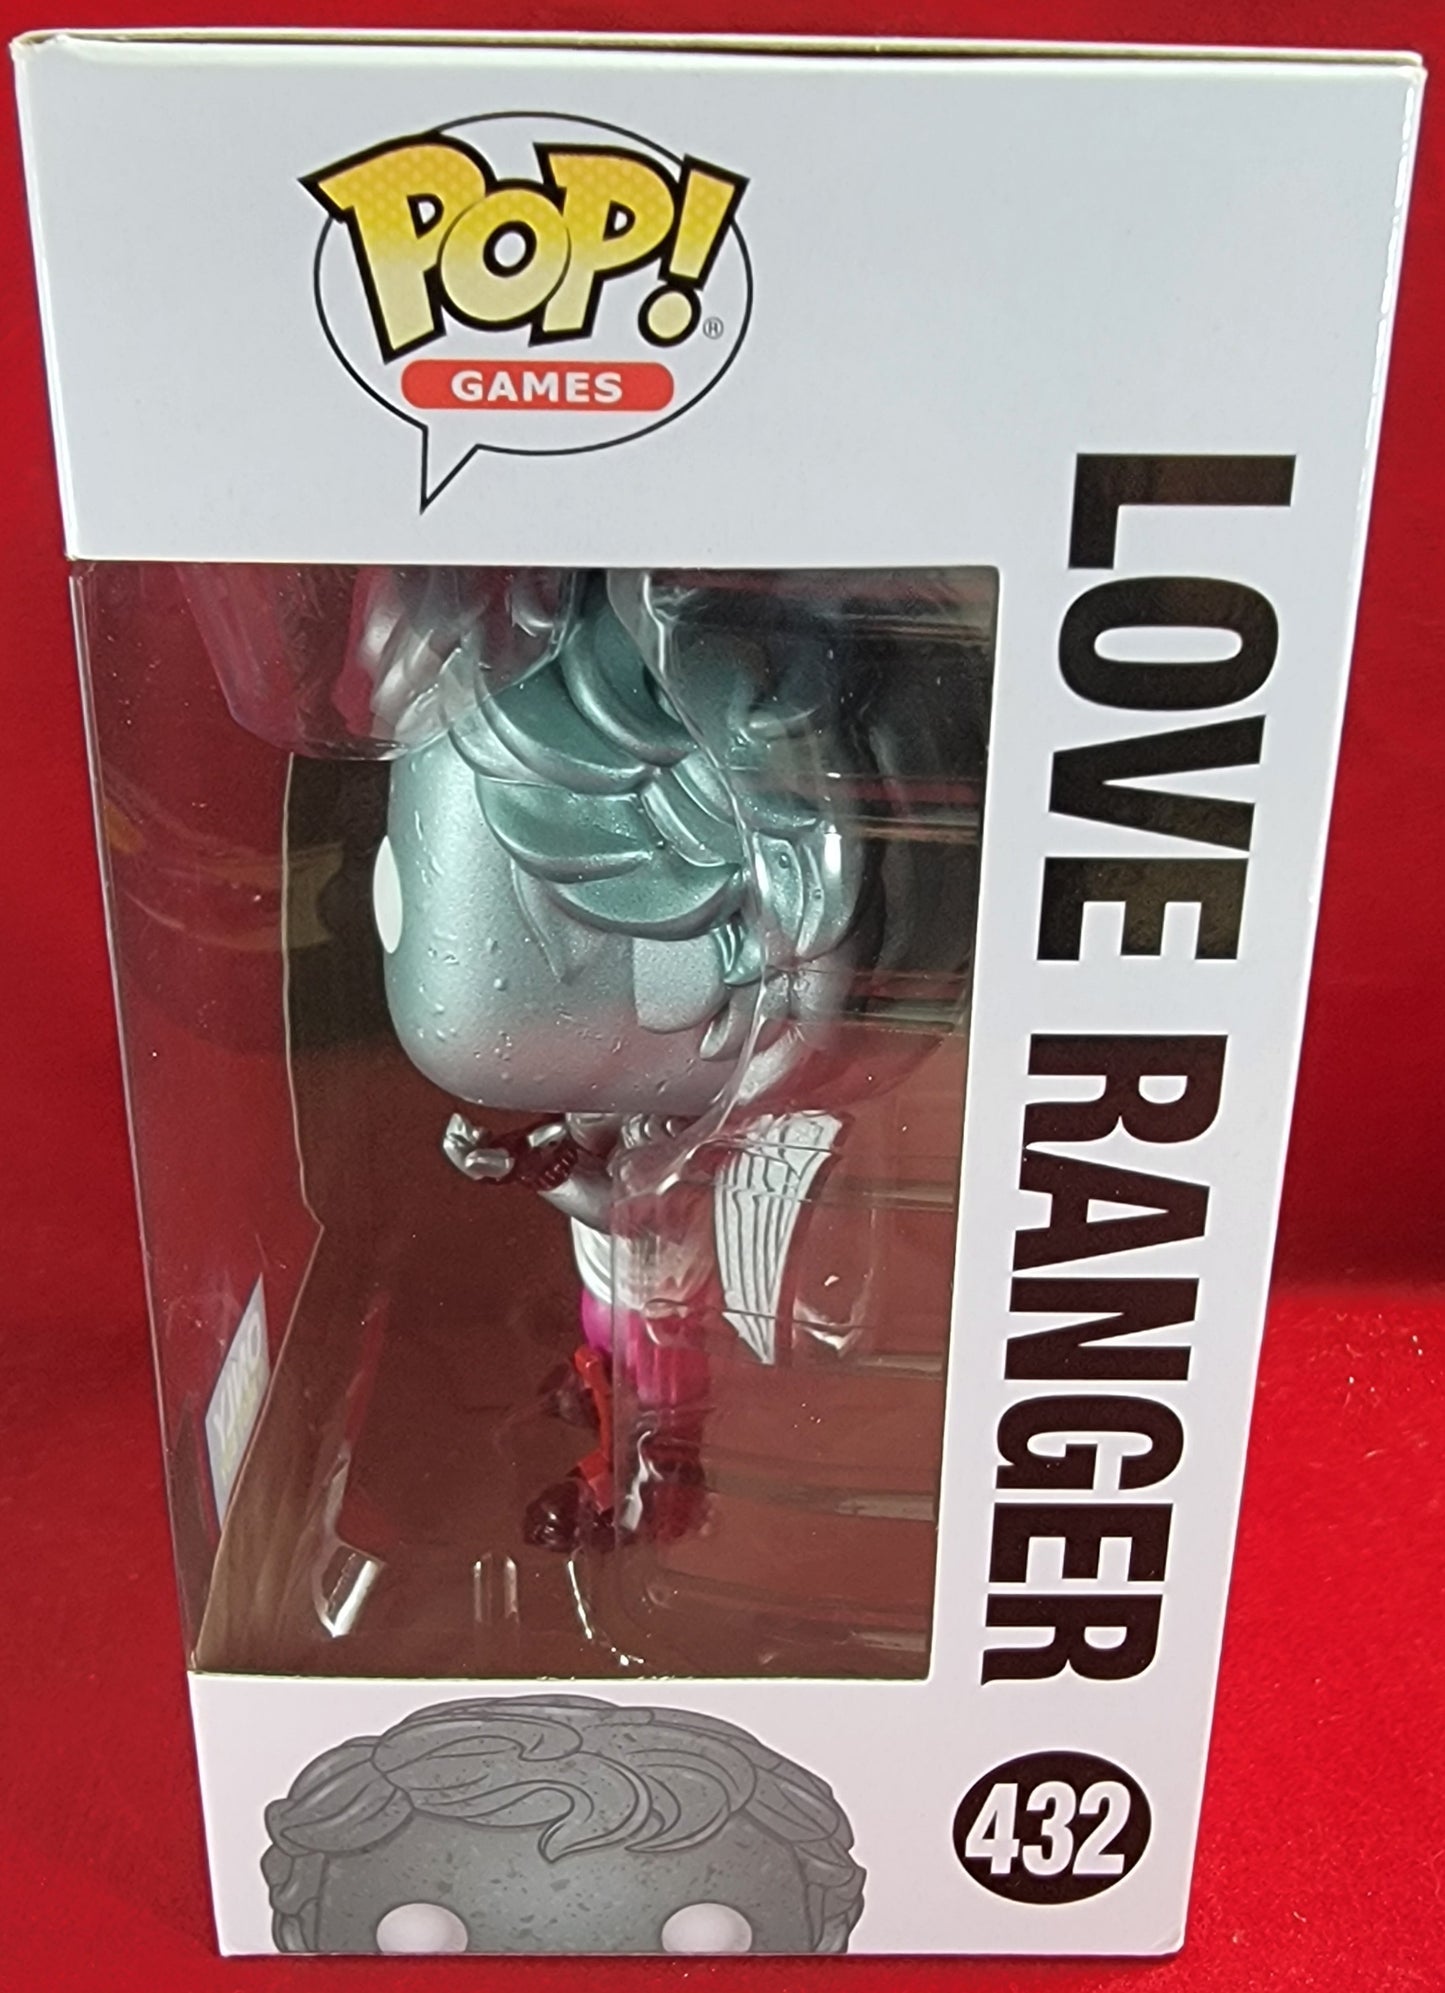 Love ranger best buy exclusive funko # 432 (nib)
With pop protector